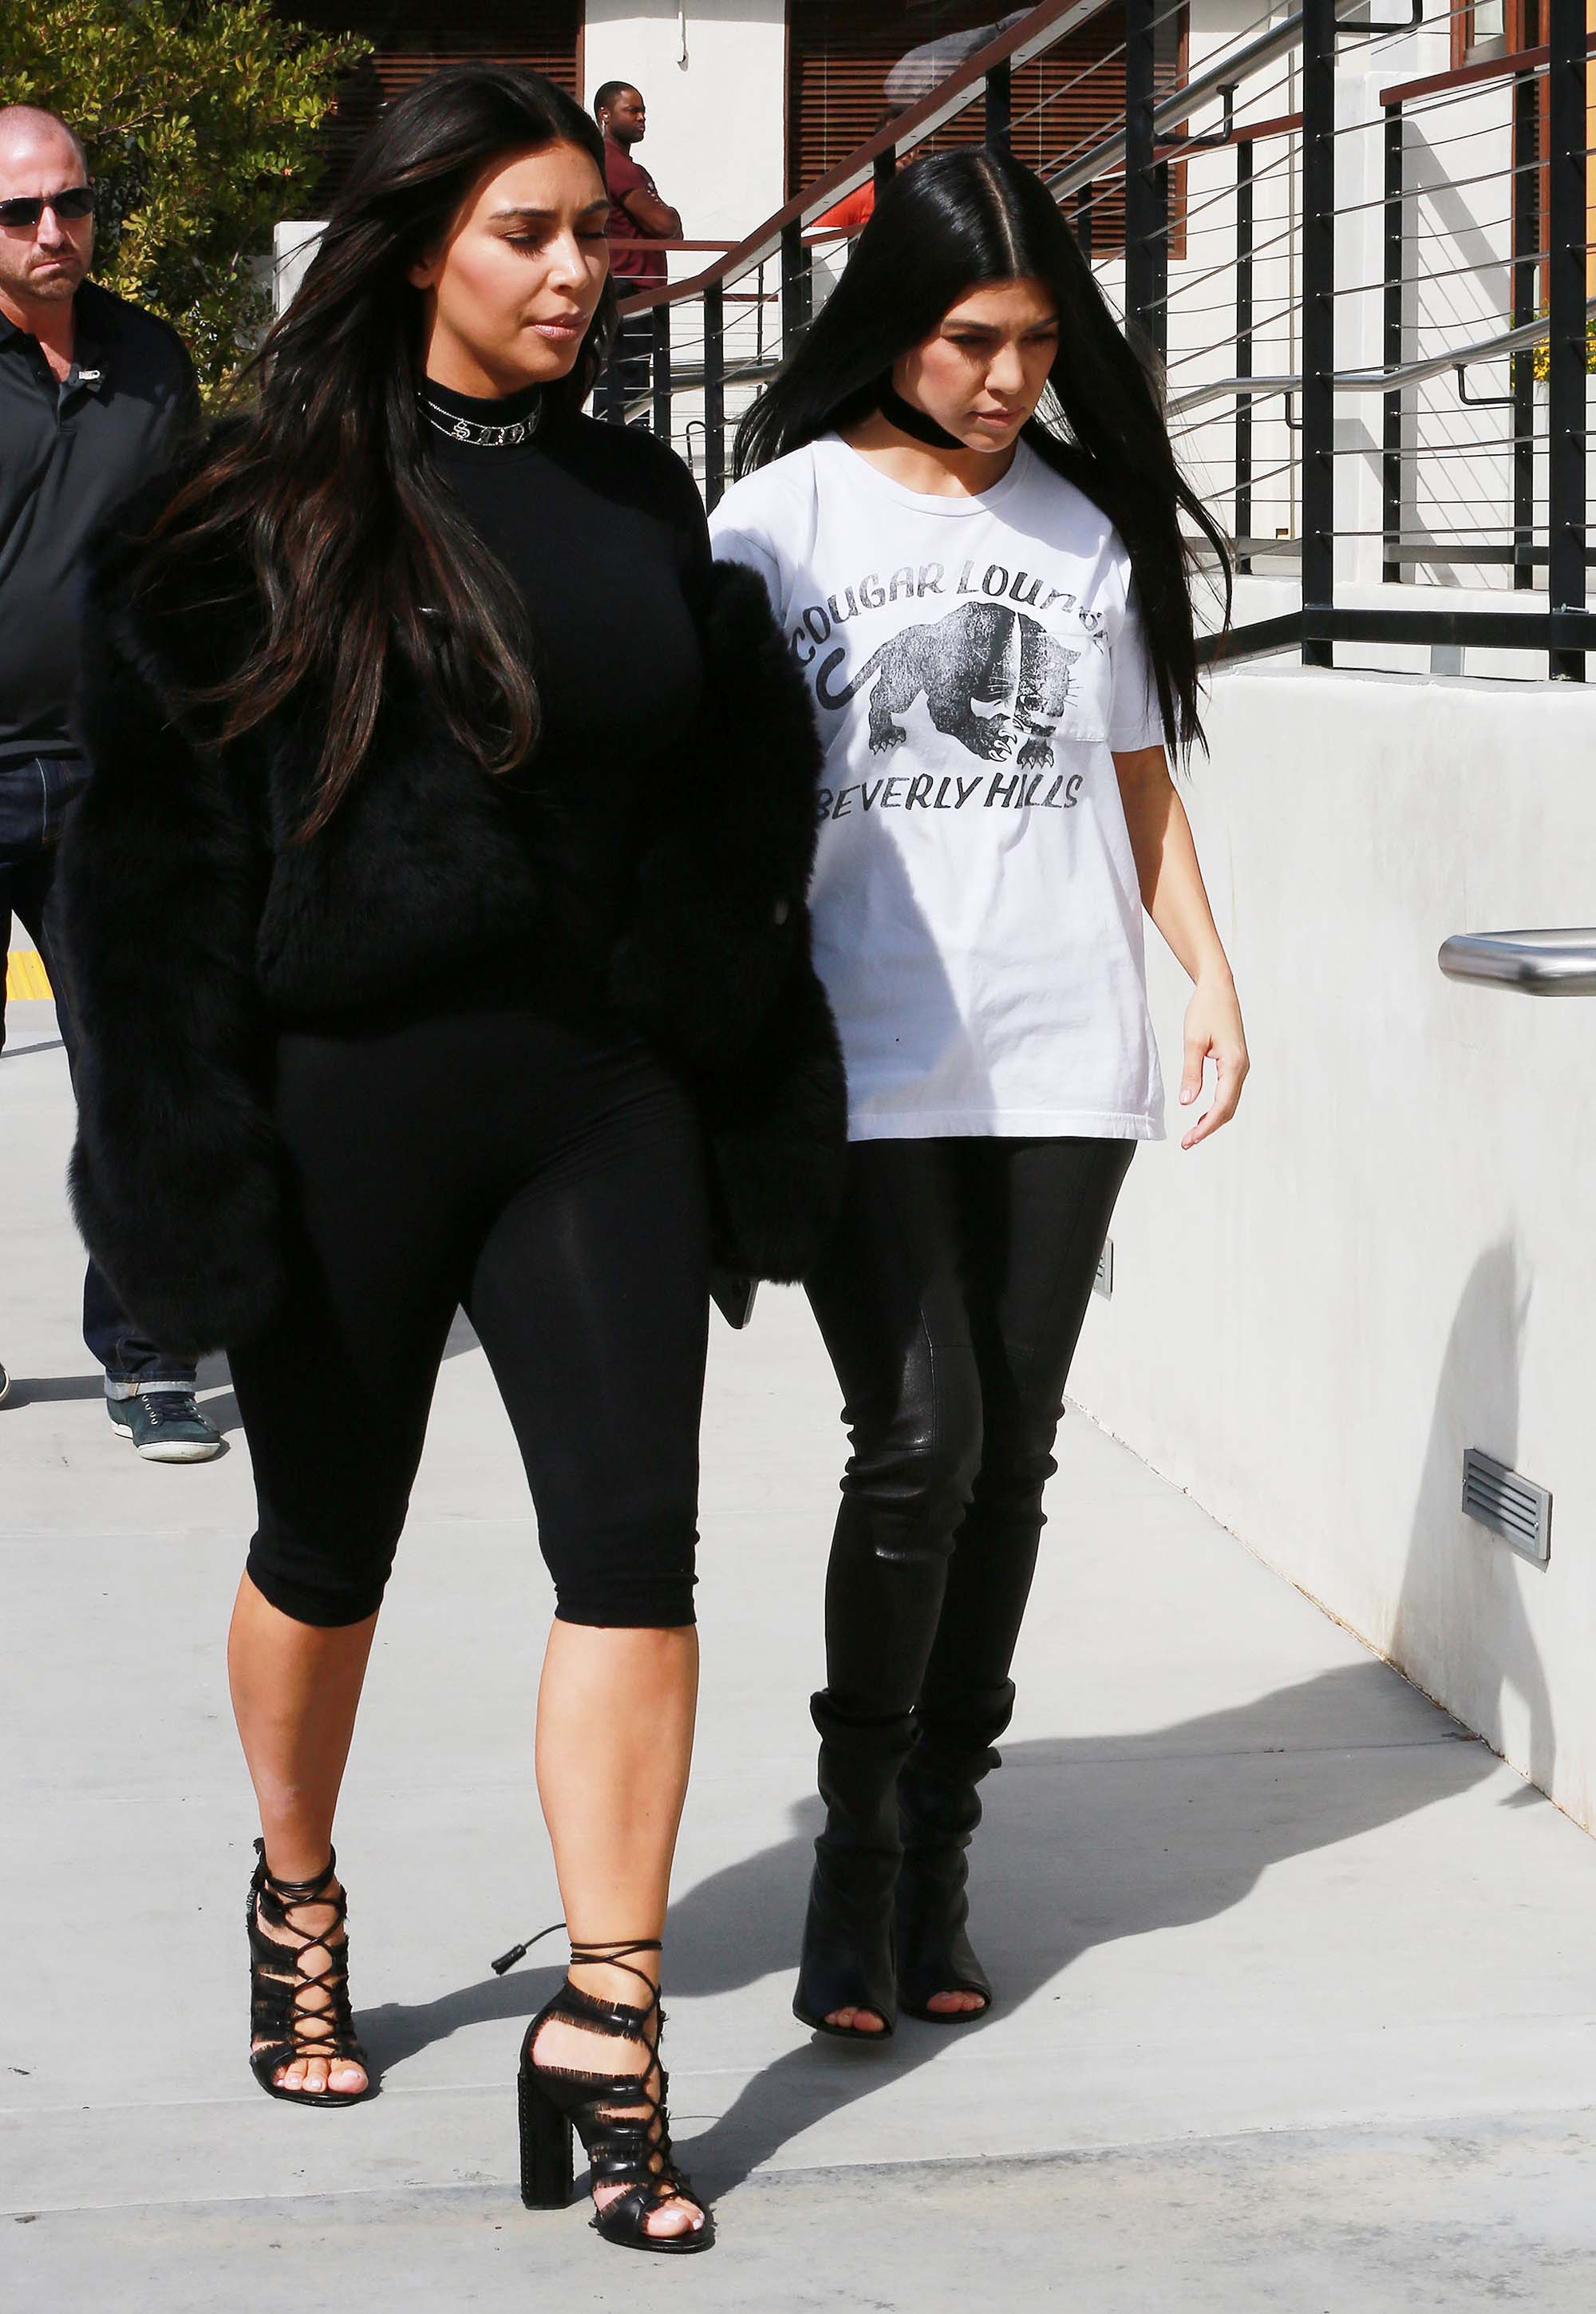 Kourtney Kardashian was seen with her sister Kim at Hugo’s Restaurant